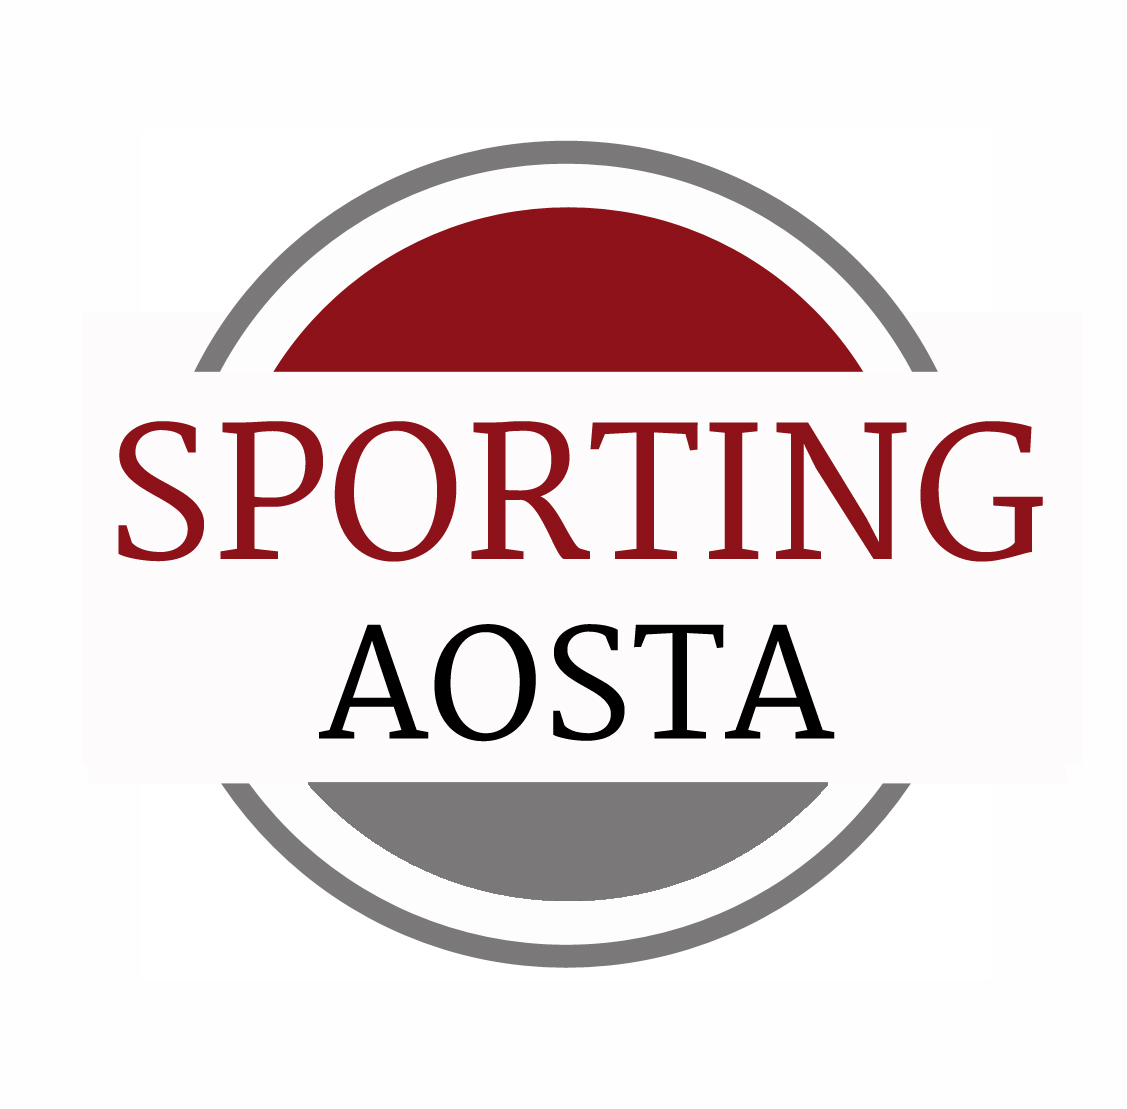 SPORTING AOSTA